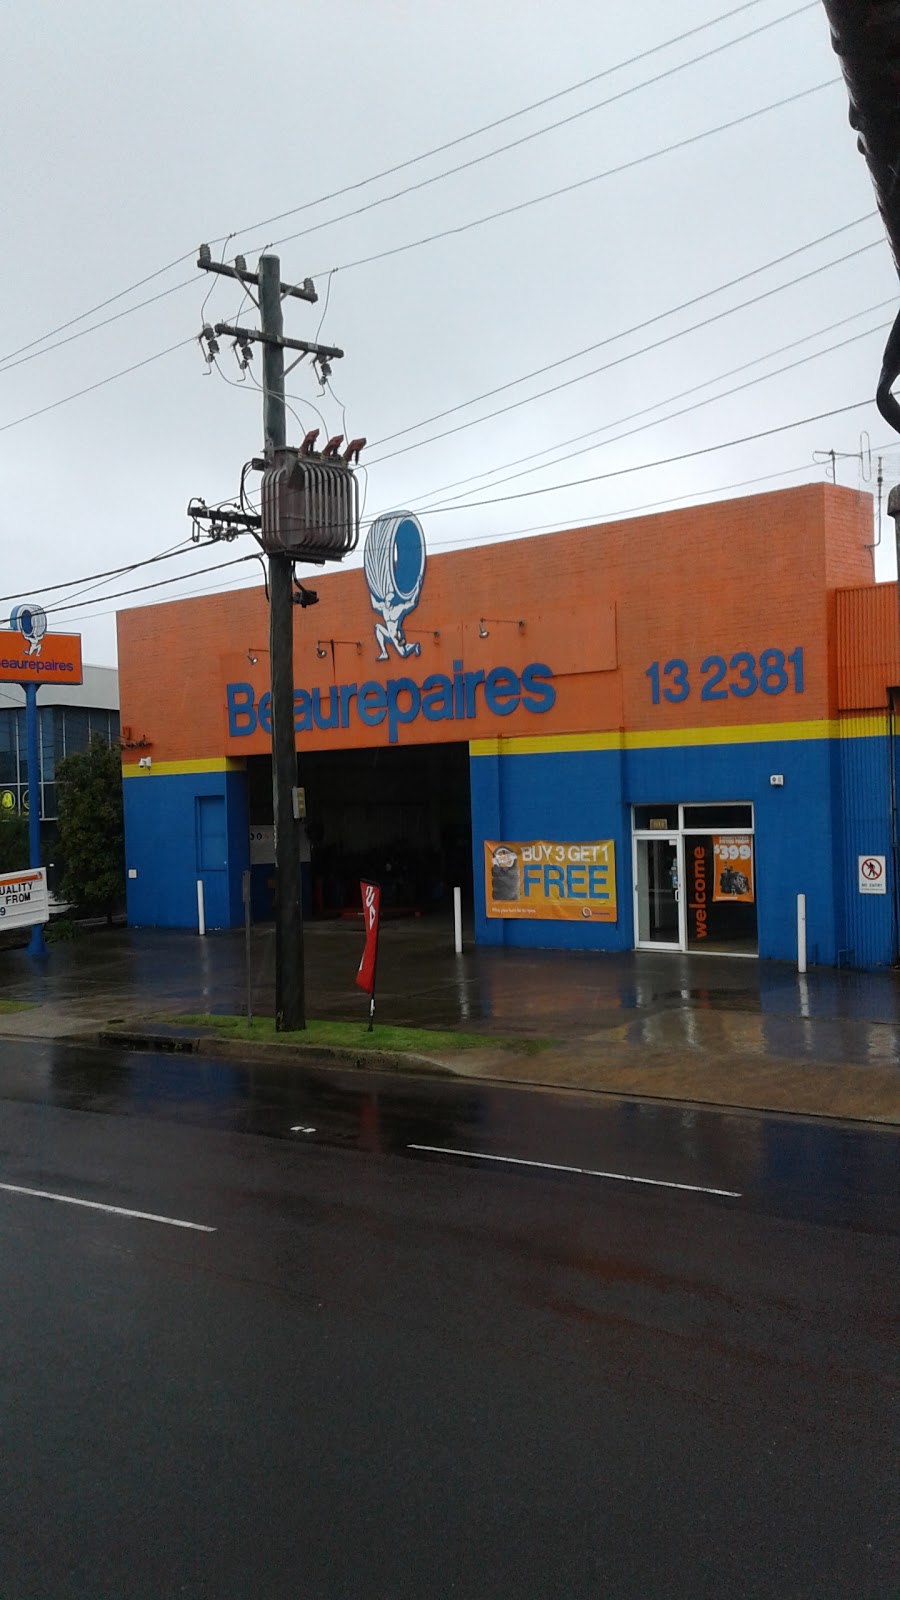 Beaurepaires Tyres Port Kembla - Retail & Commercial | car repair | 65 Five Islands Rd, Port Kembla NSW 2505, Australia | 0242049629 OR +61 2 4204 9629